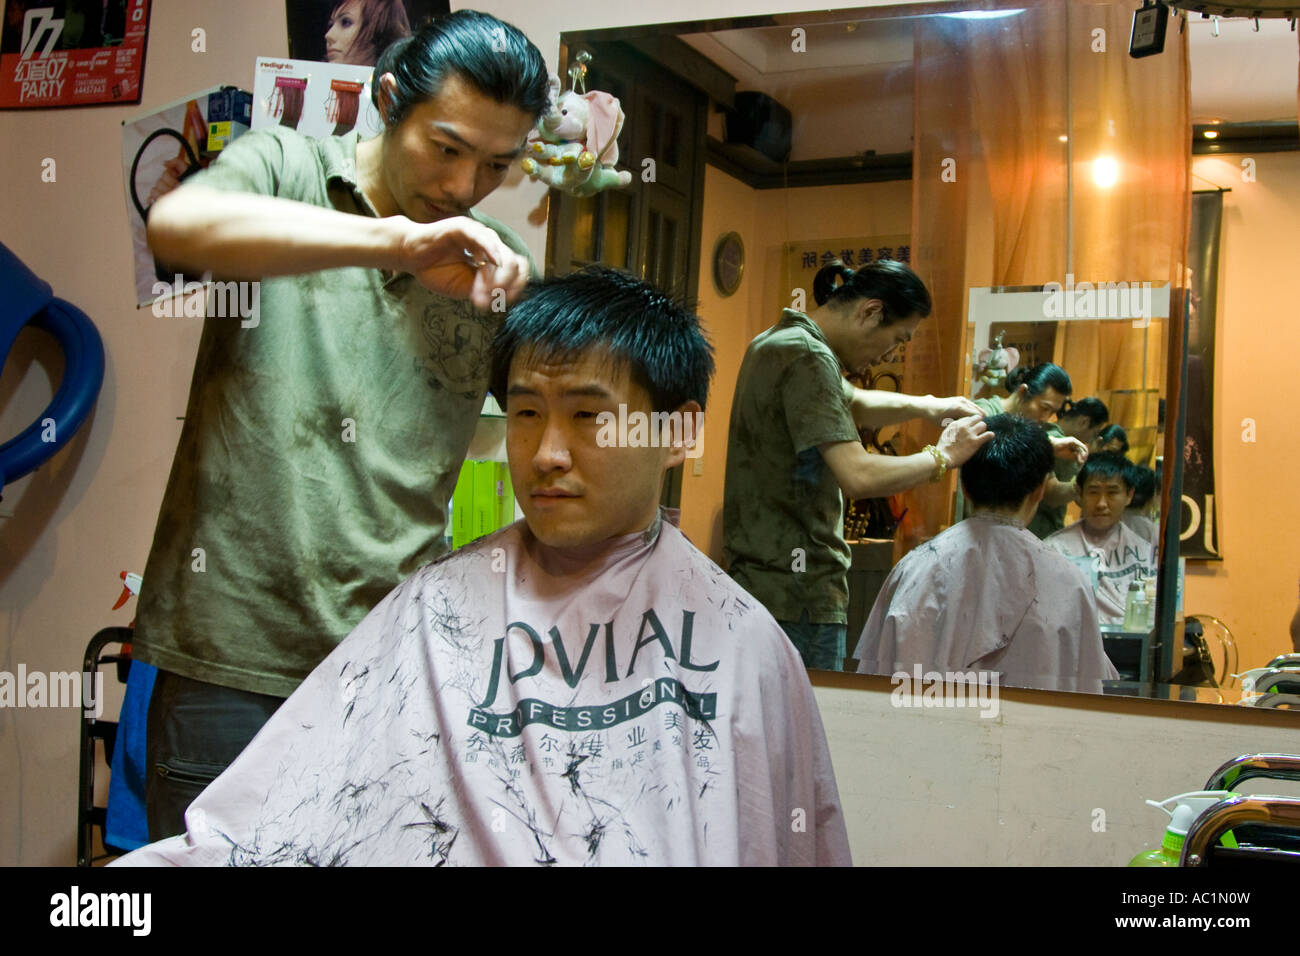 Korean Man getting Haircut in Stylish Hair Cutting Salon Shanghai China  Stock Photo - Alamy